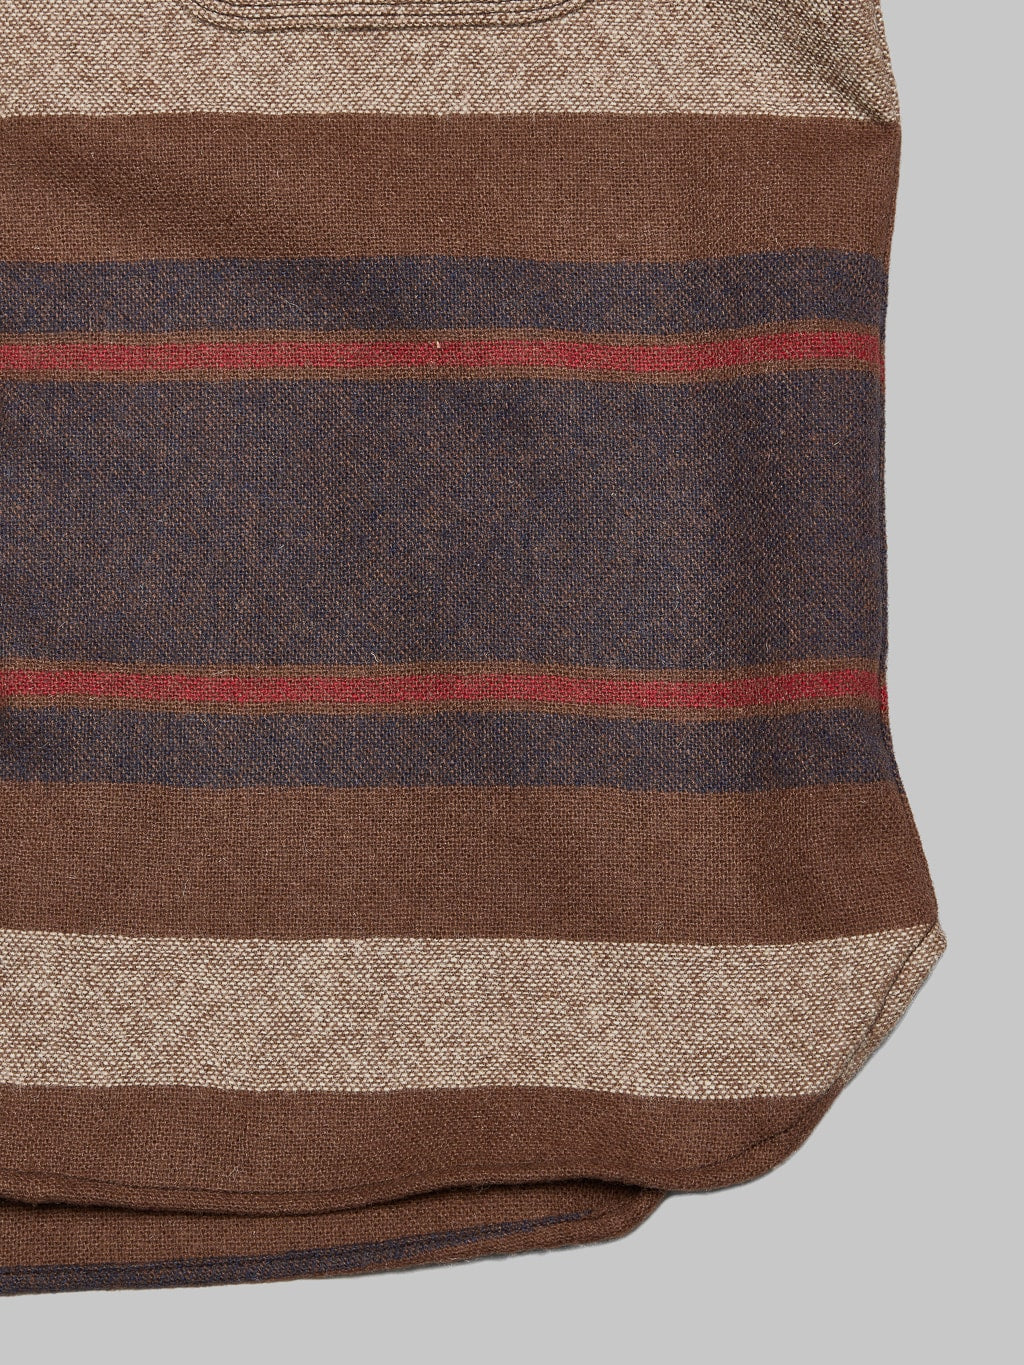 freenote cloth benson brown stripe classic wool overshirt pattern